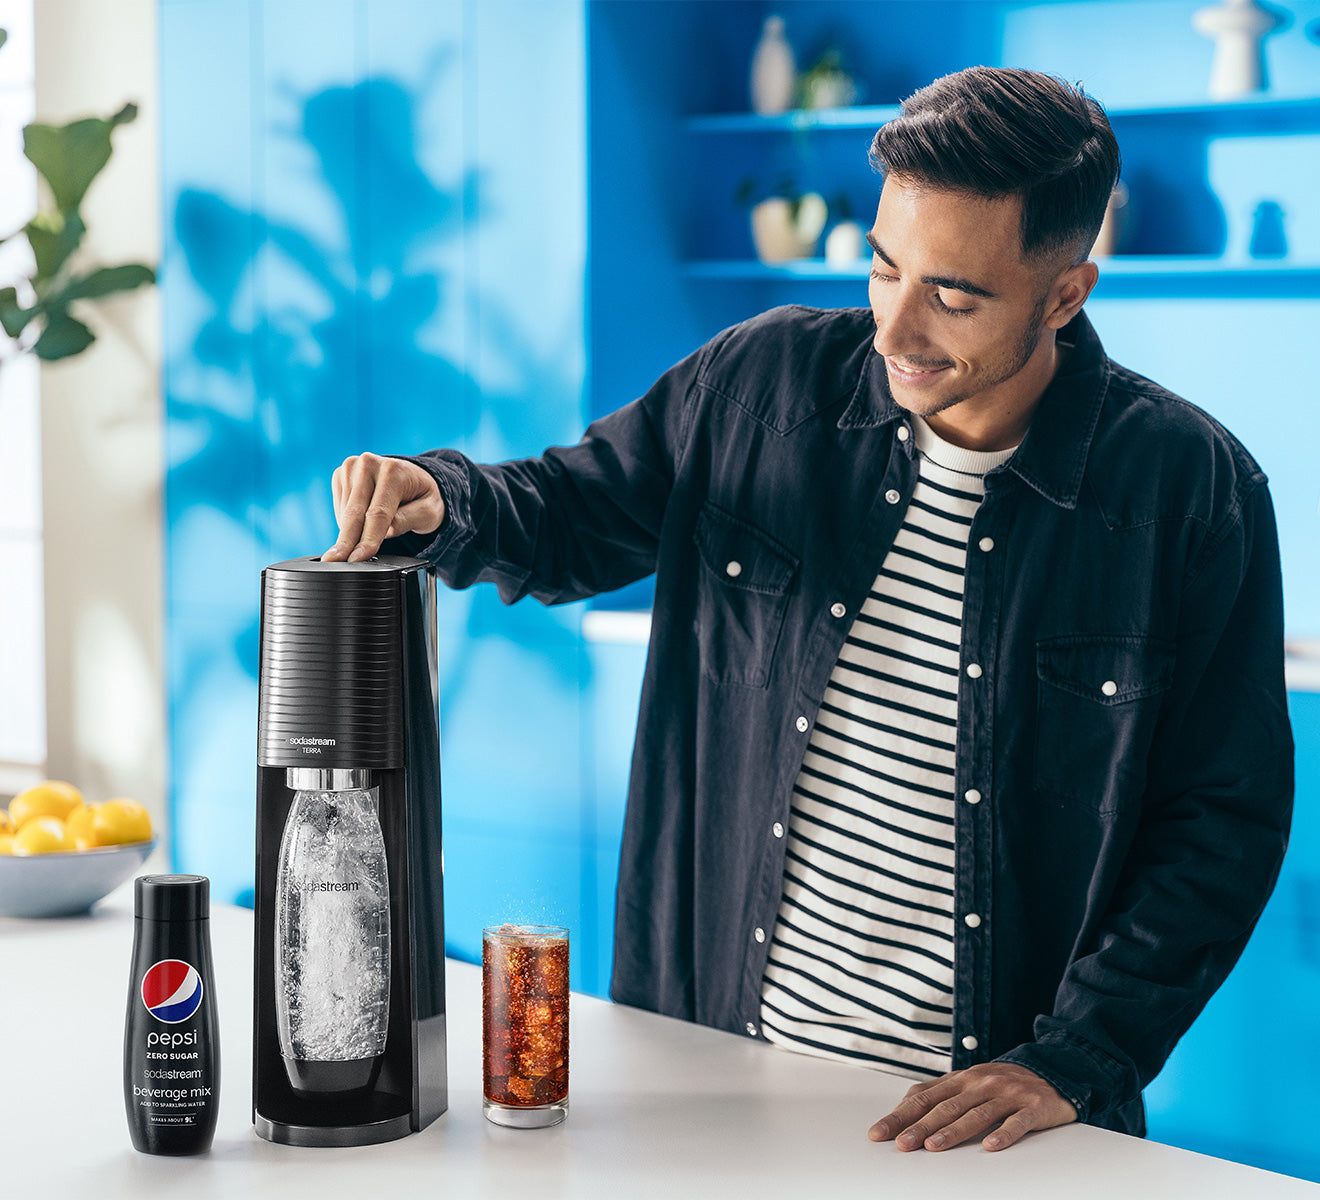 SodaStream - Pepsi & 7UP & Mirinda Syrups - 3 bottels 440ml each